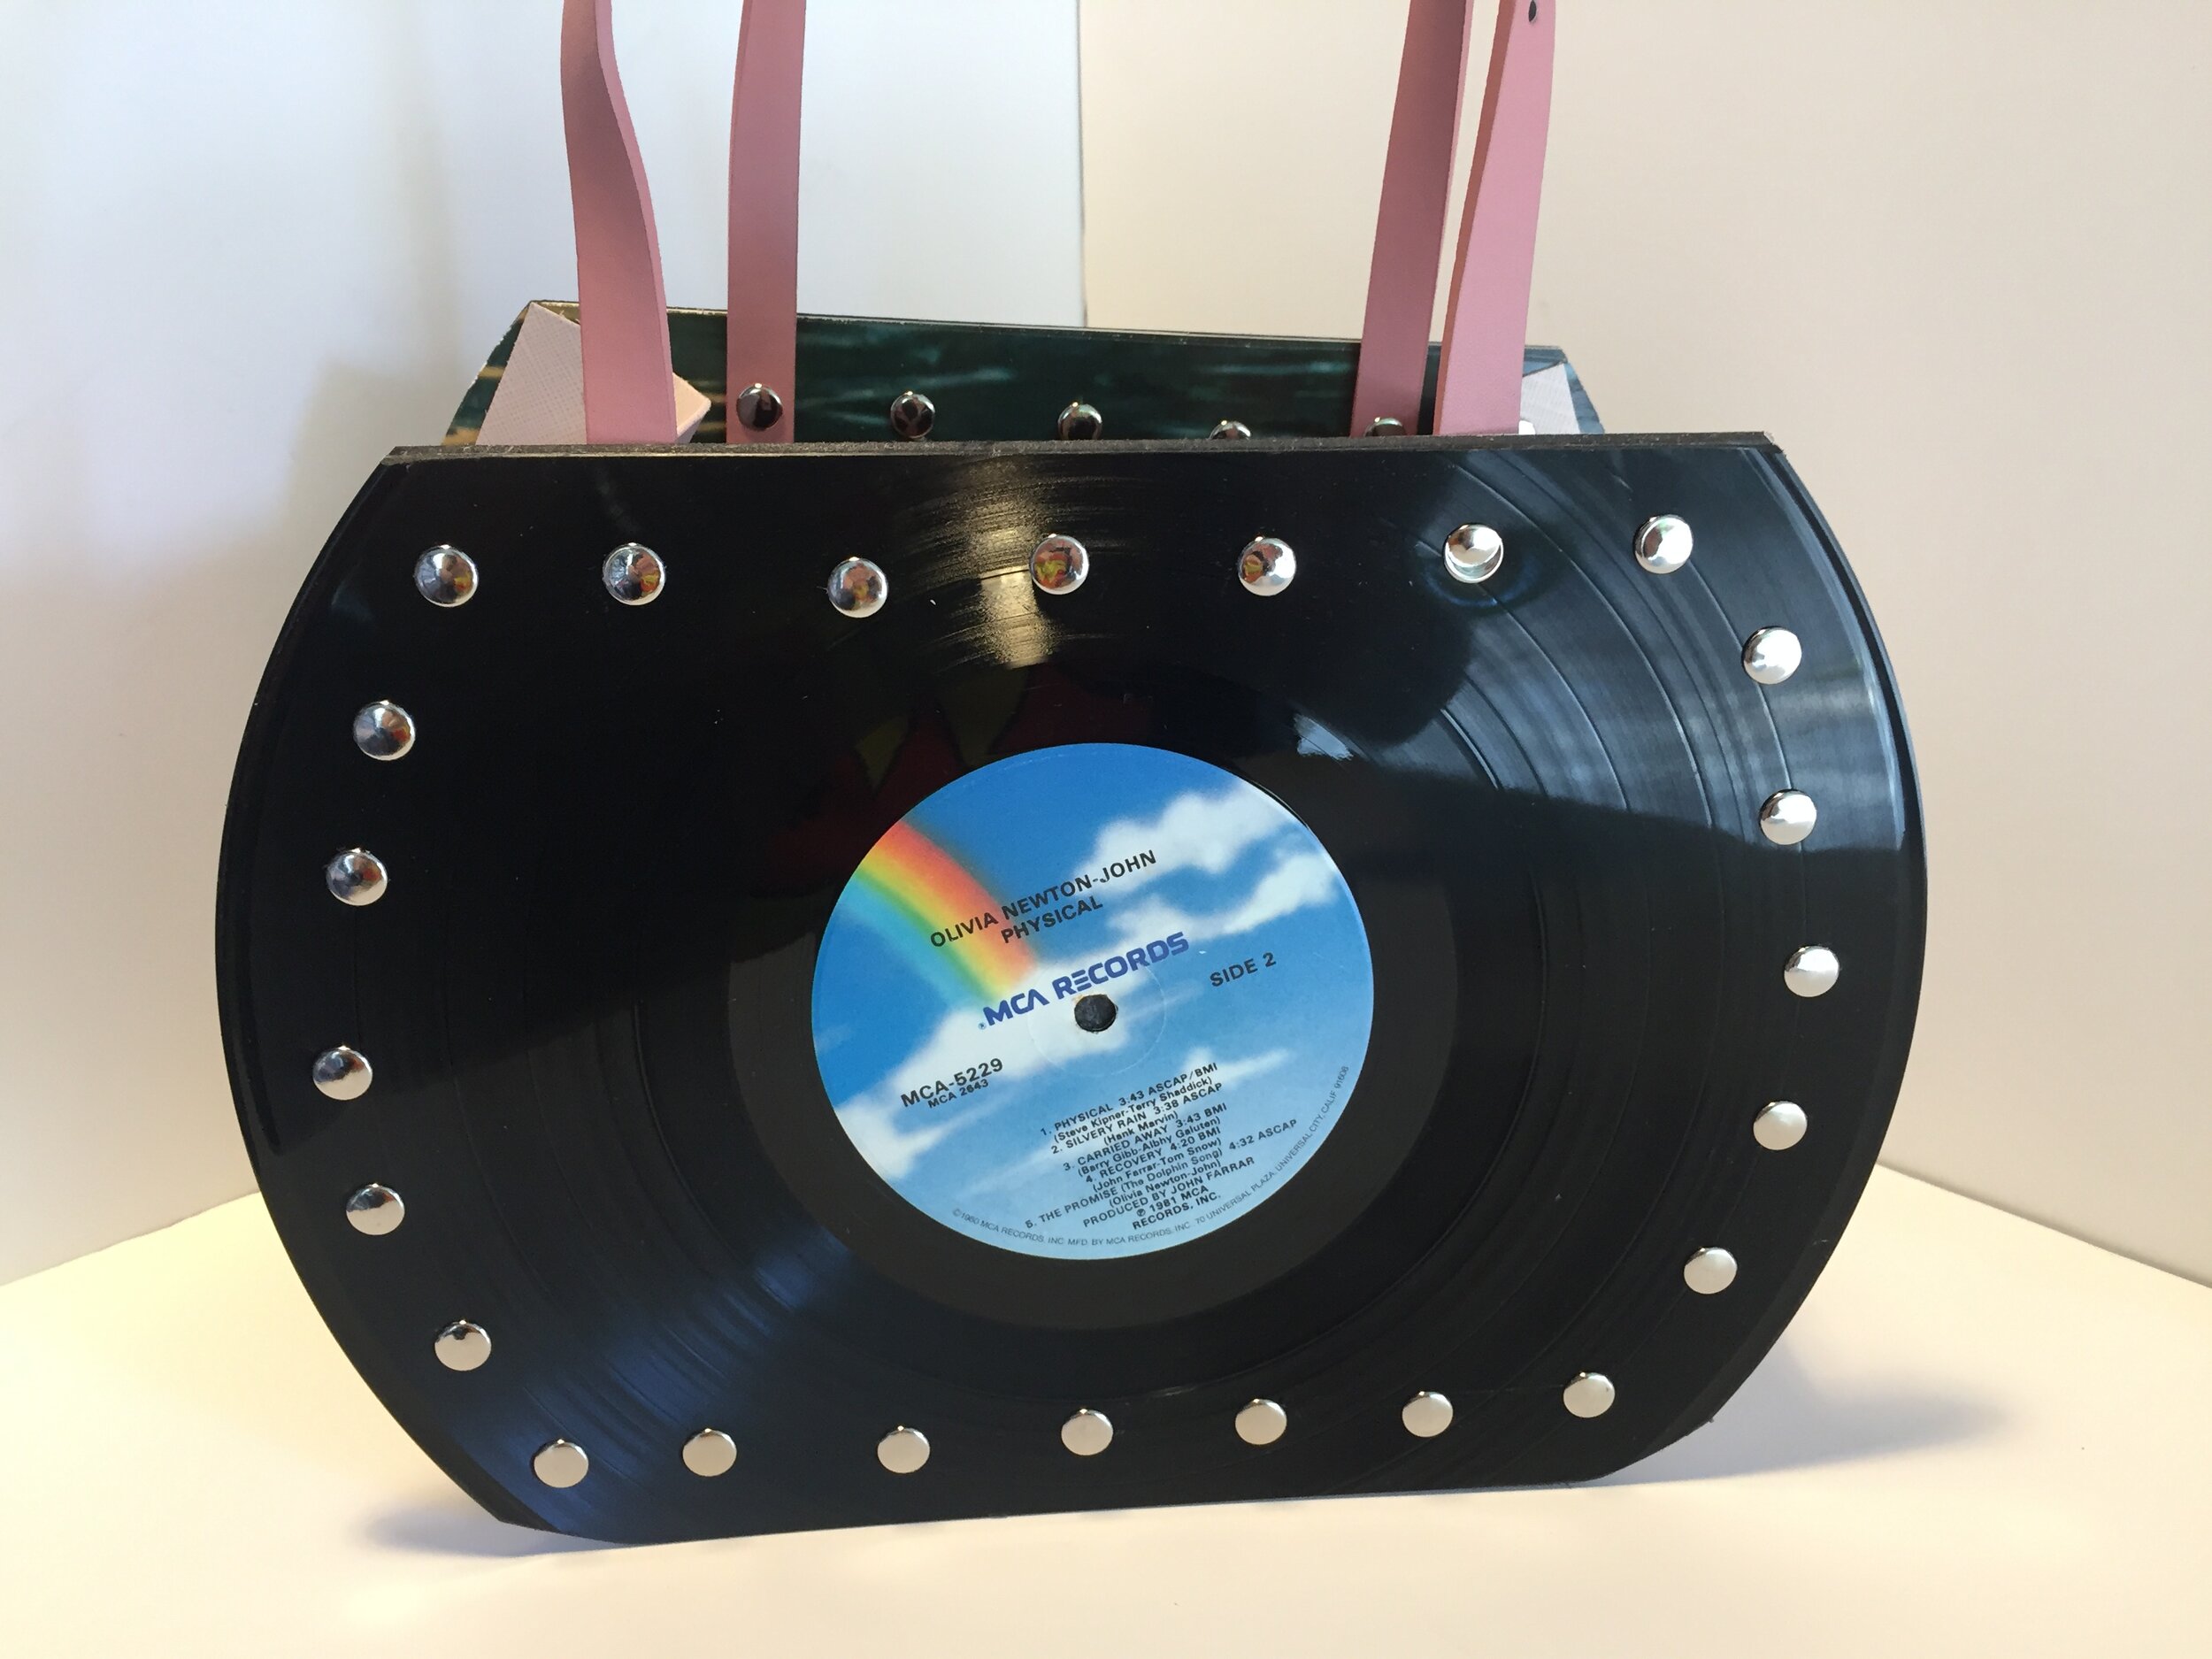 Olivia Newton-John “Physical” vinyl record purse — She’s A Rainbow